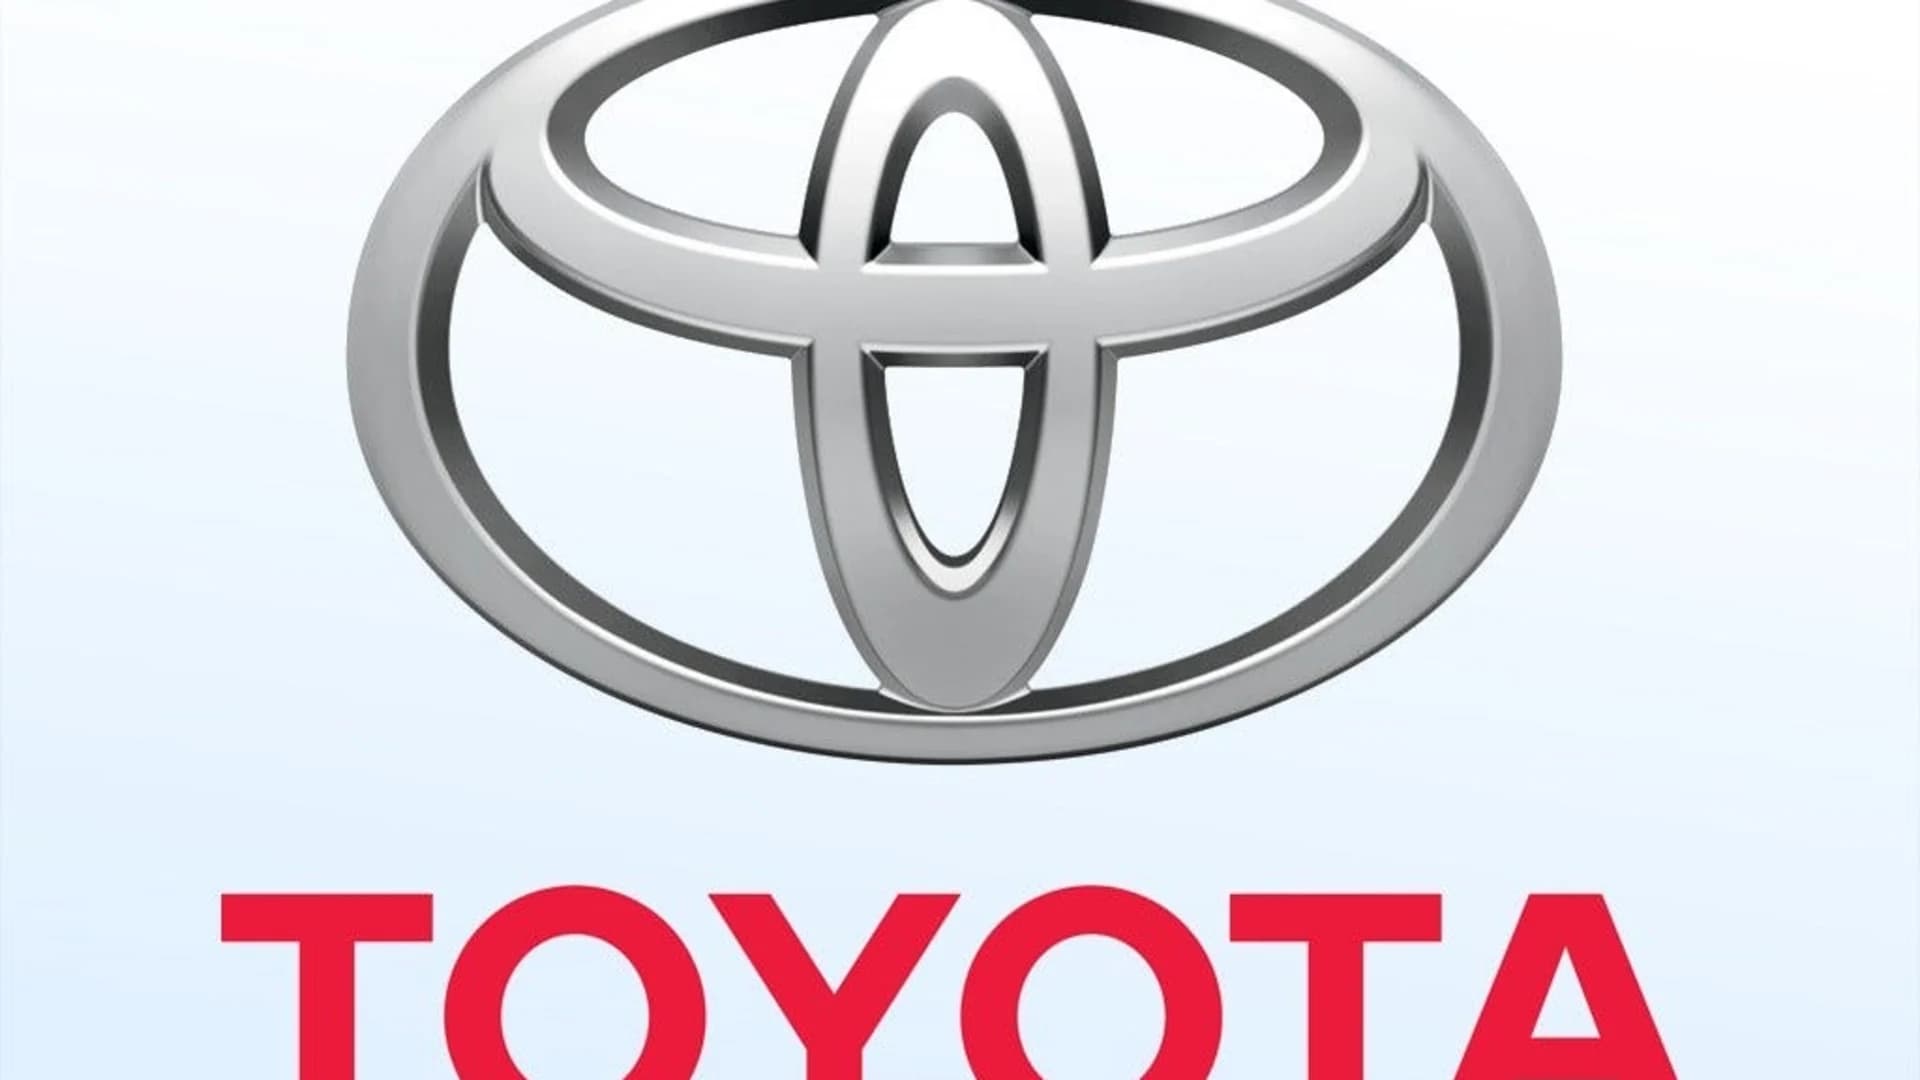 Toyota recalls around 1.3 million vehicles over Takata airbags